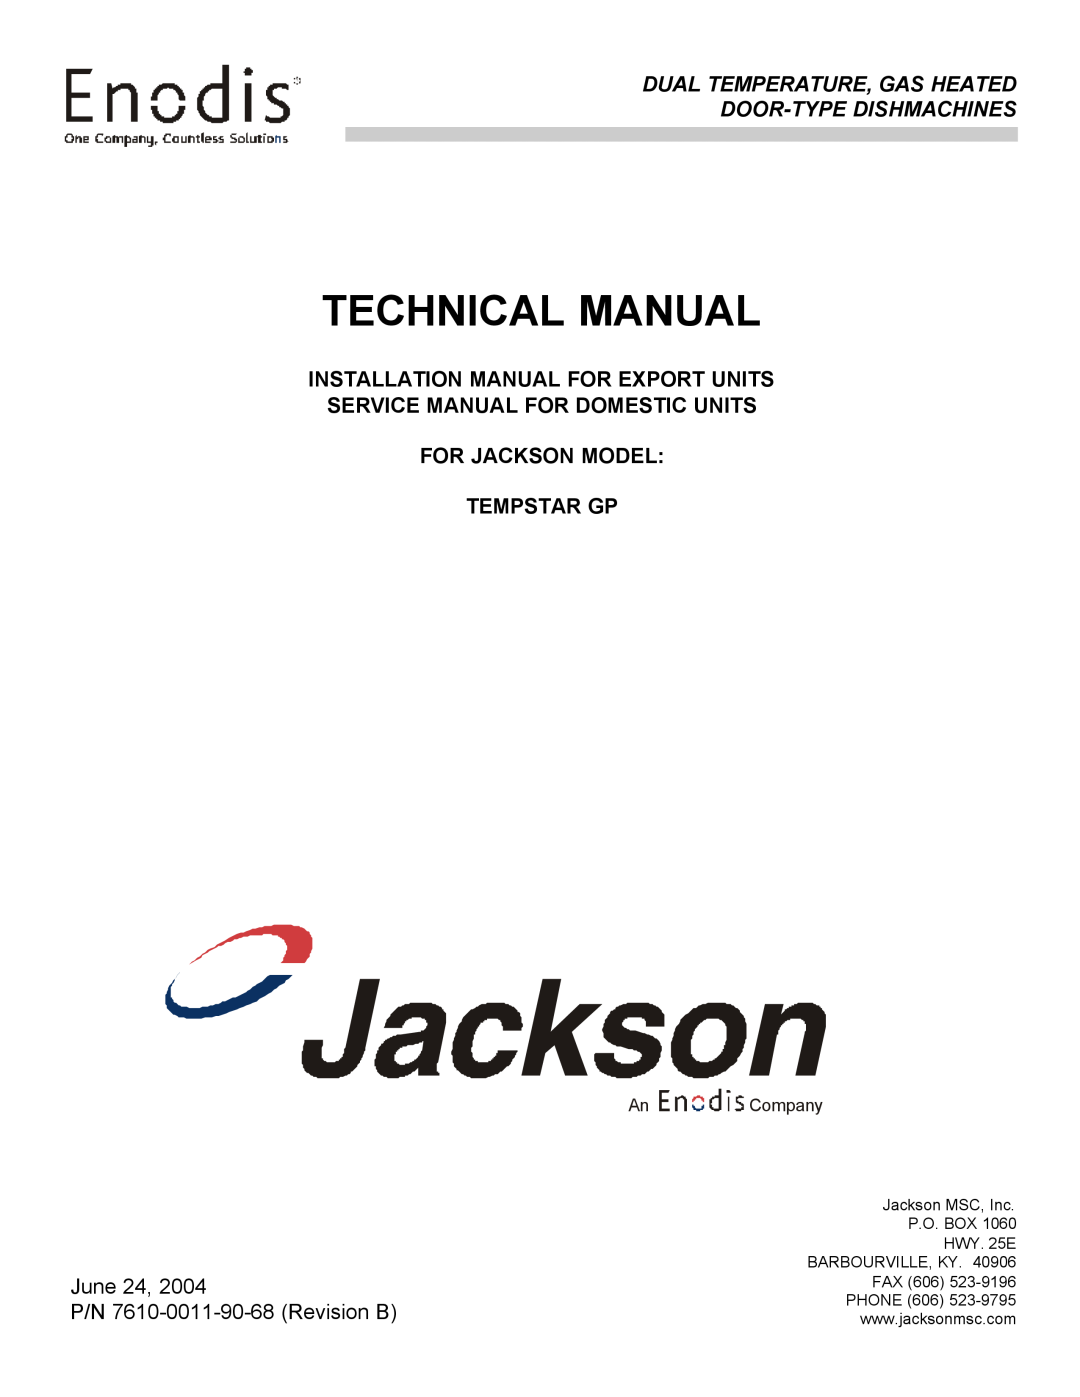 Jackson Tempstar GP technical manual Installation Manual For Export Units, June 24 P/N 7610-0011-90-68 Revision B 